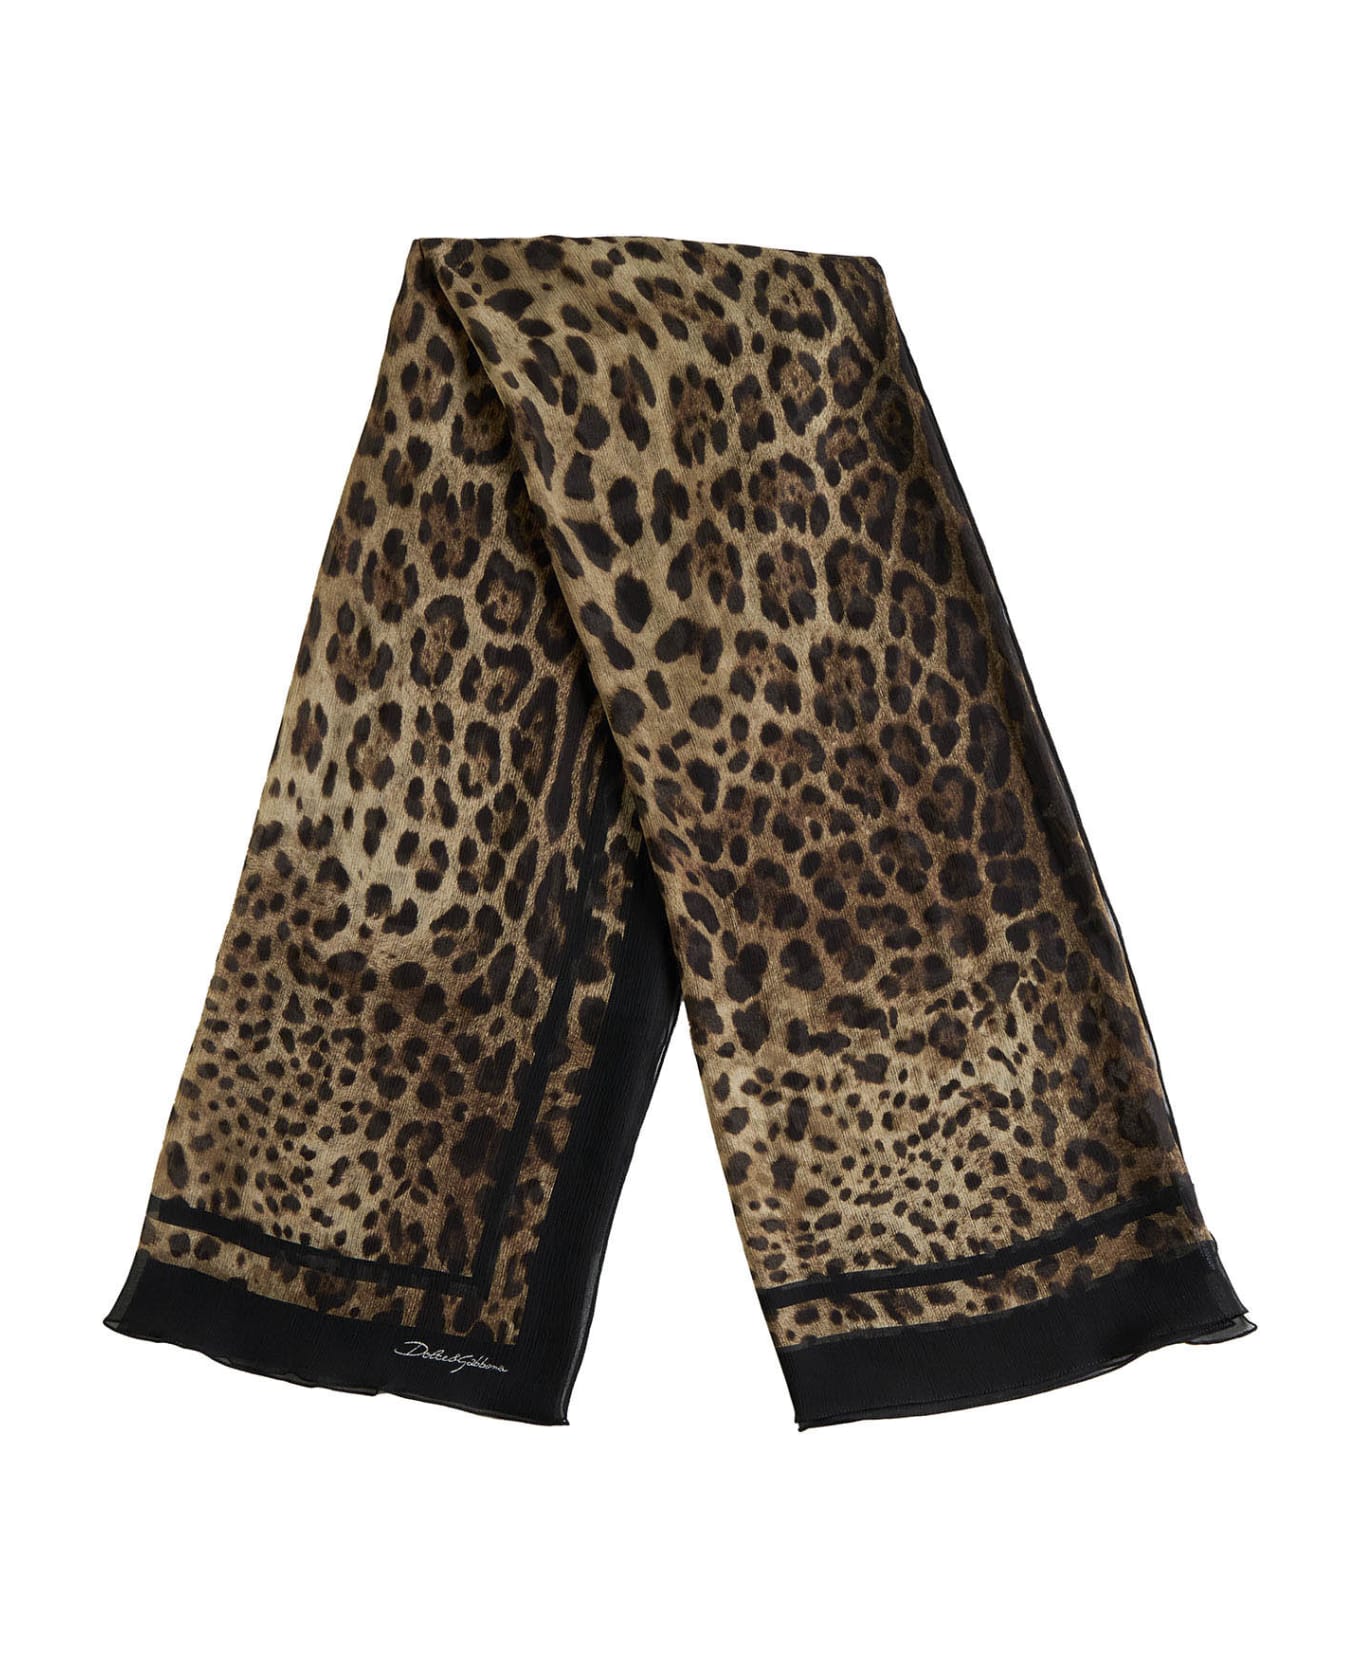 Dolce & Gabbana 'leopard' Scarf - Leo marrone bdo nero